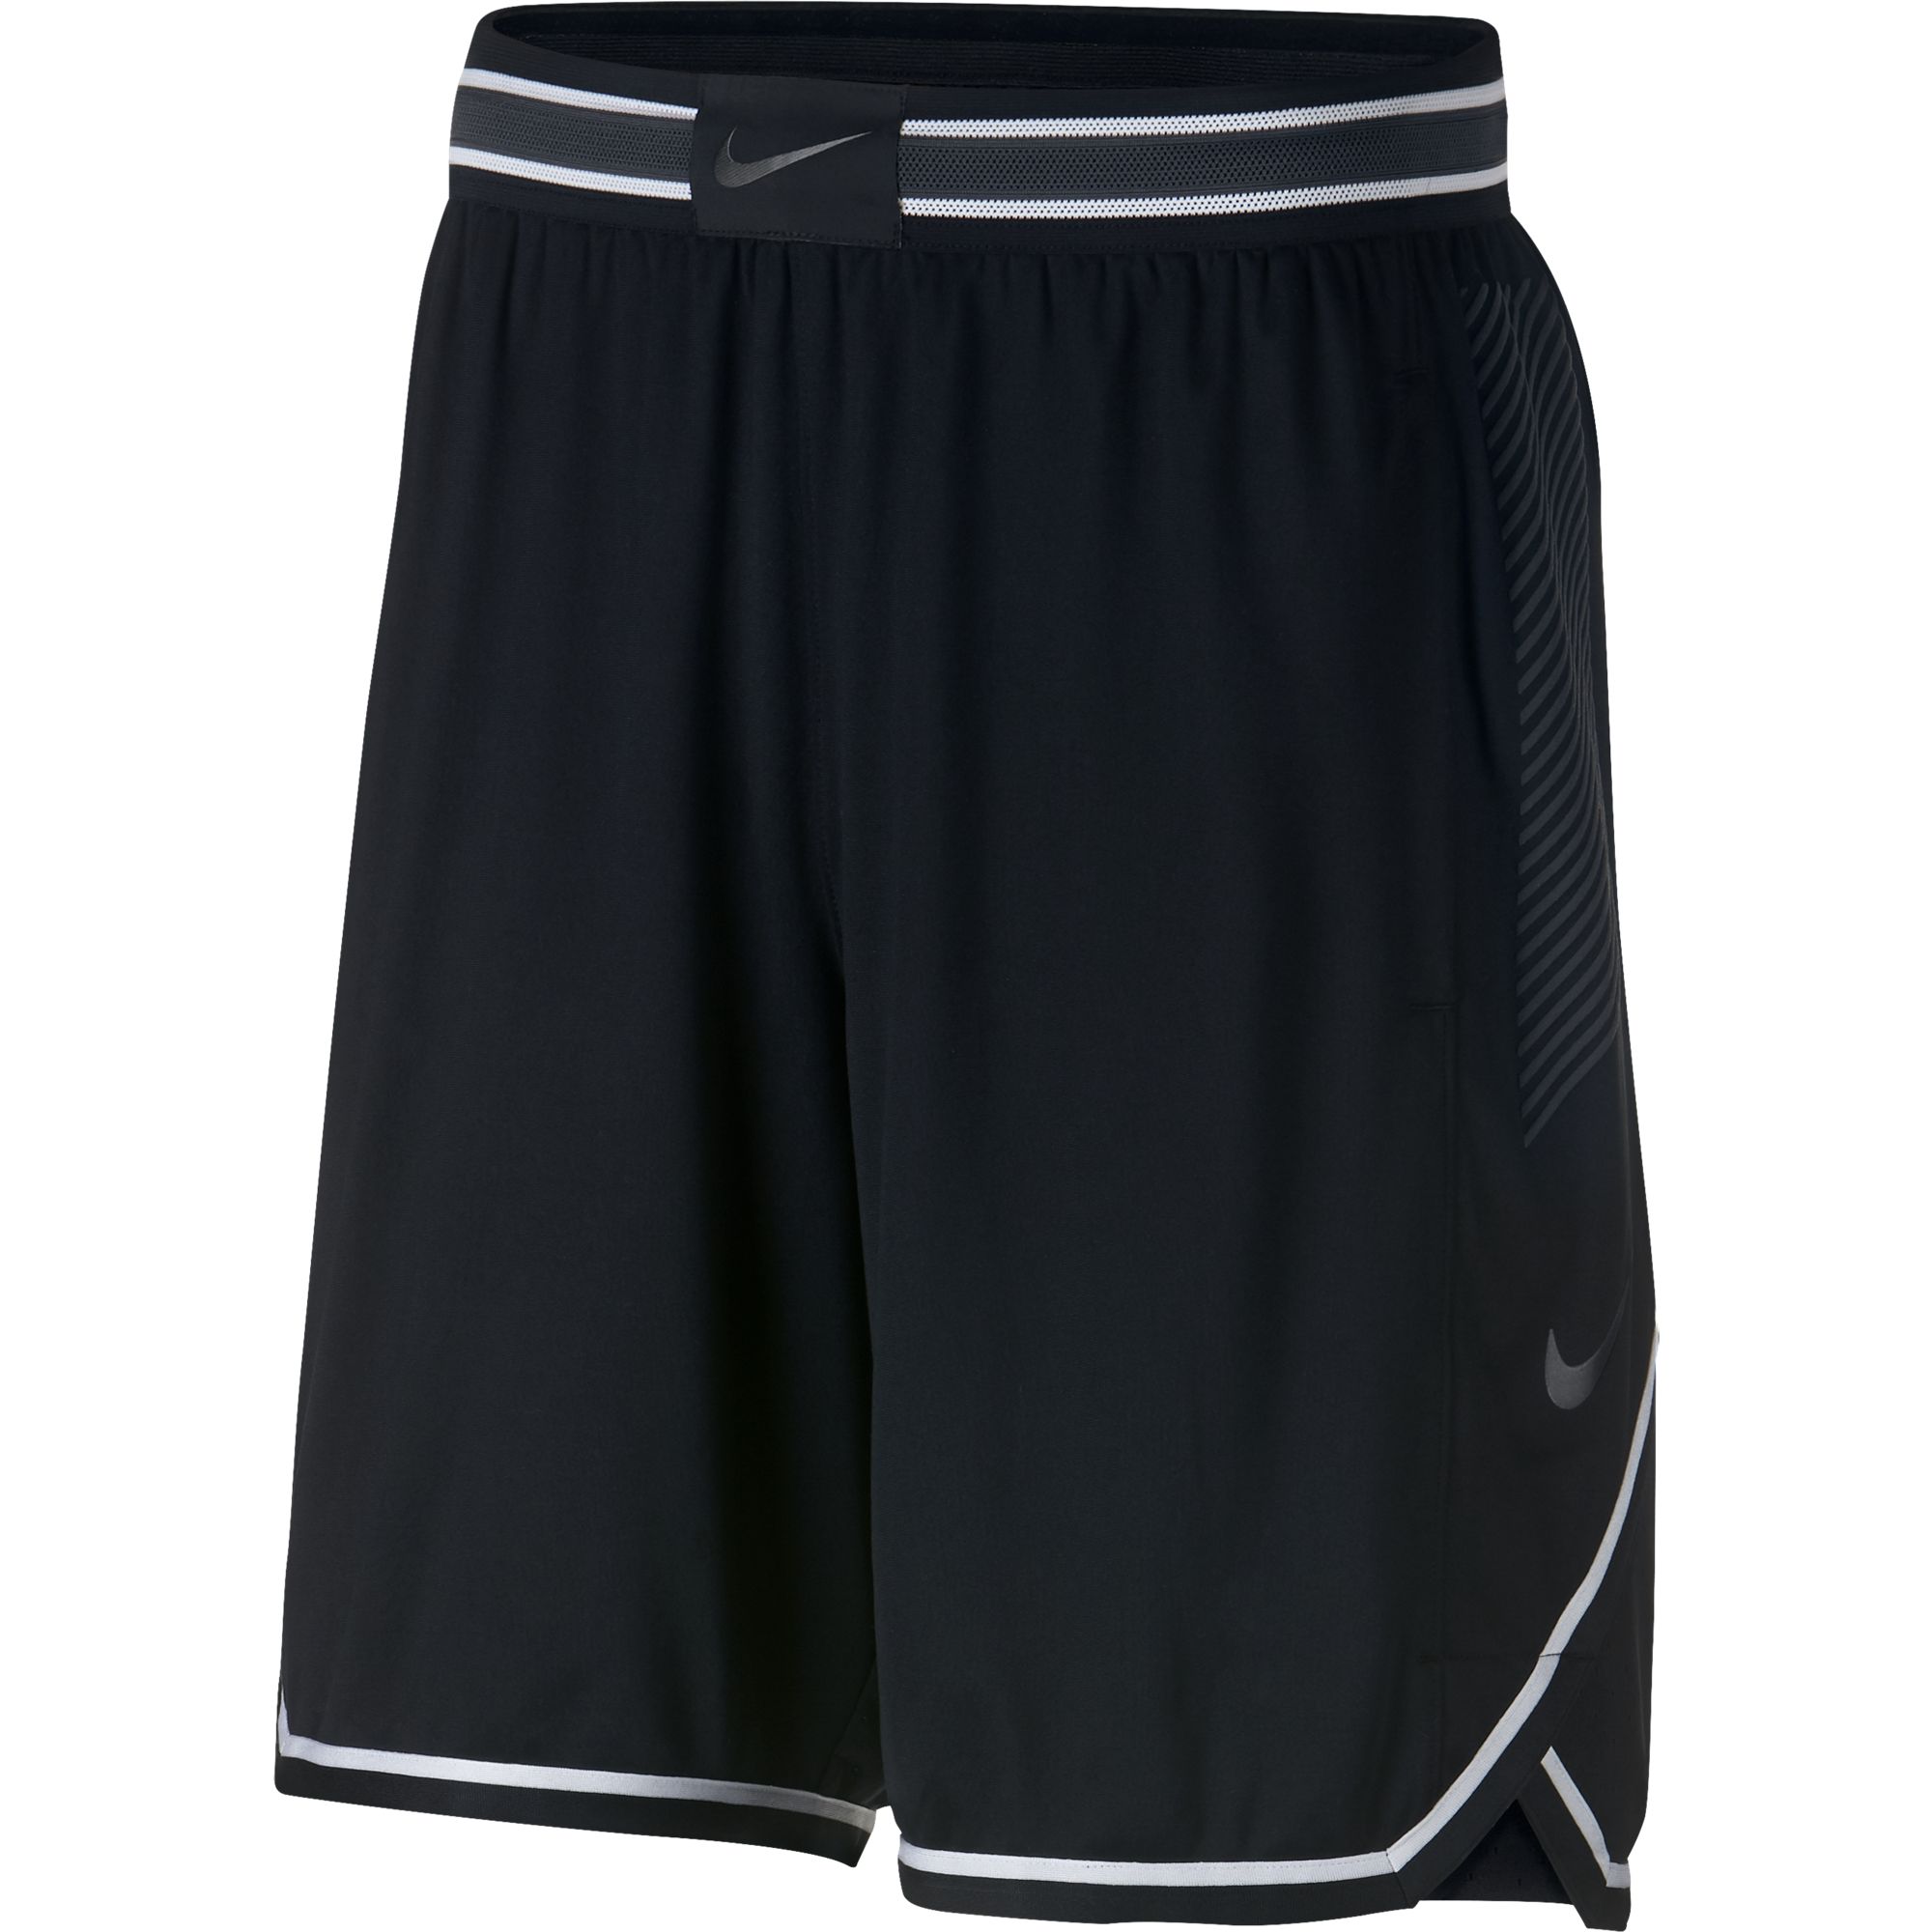 Баскетбольные шорты Nike VaporKnit Men's Basketball Shorts - картинка